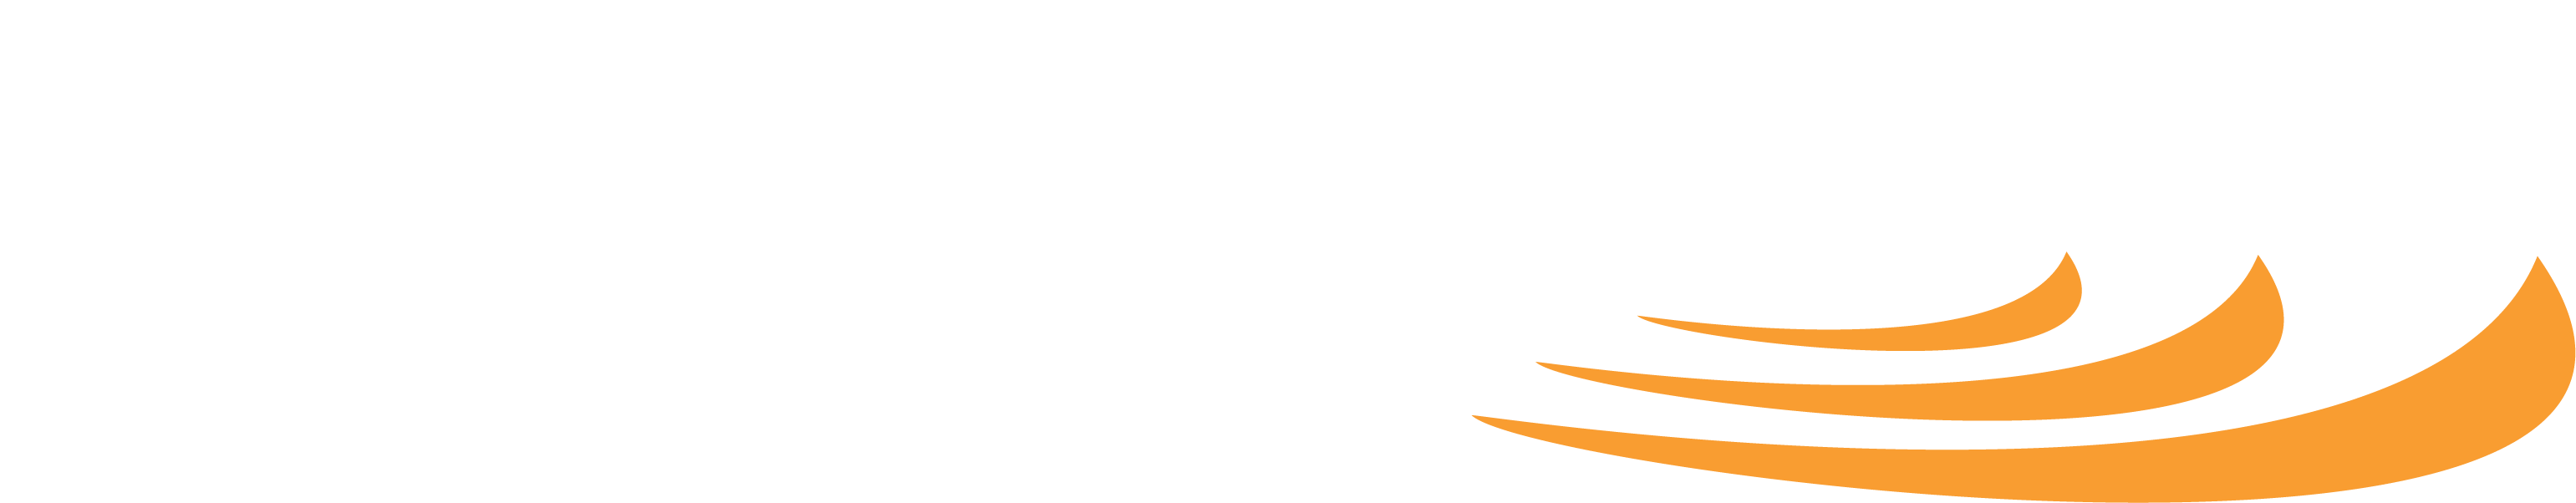 MicroSeismic 20th anniversary logo